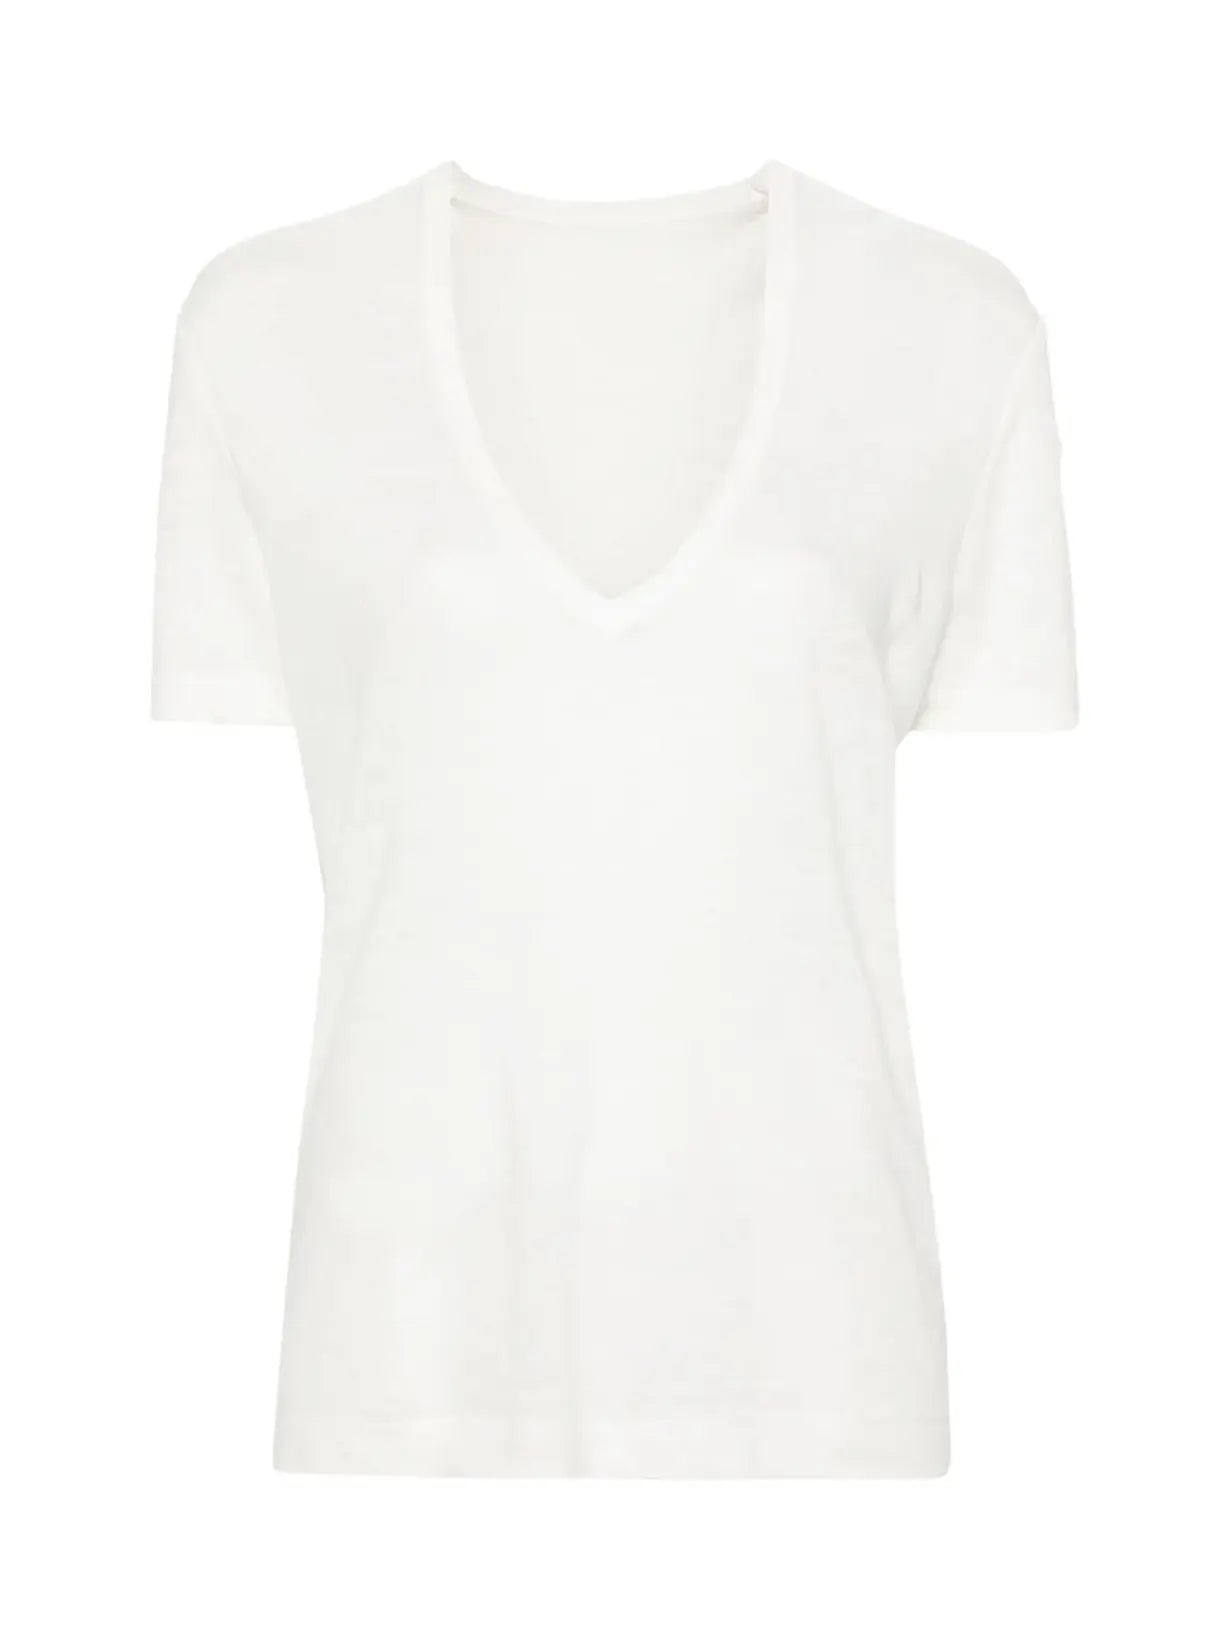 WASSA linen t-shirt, white